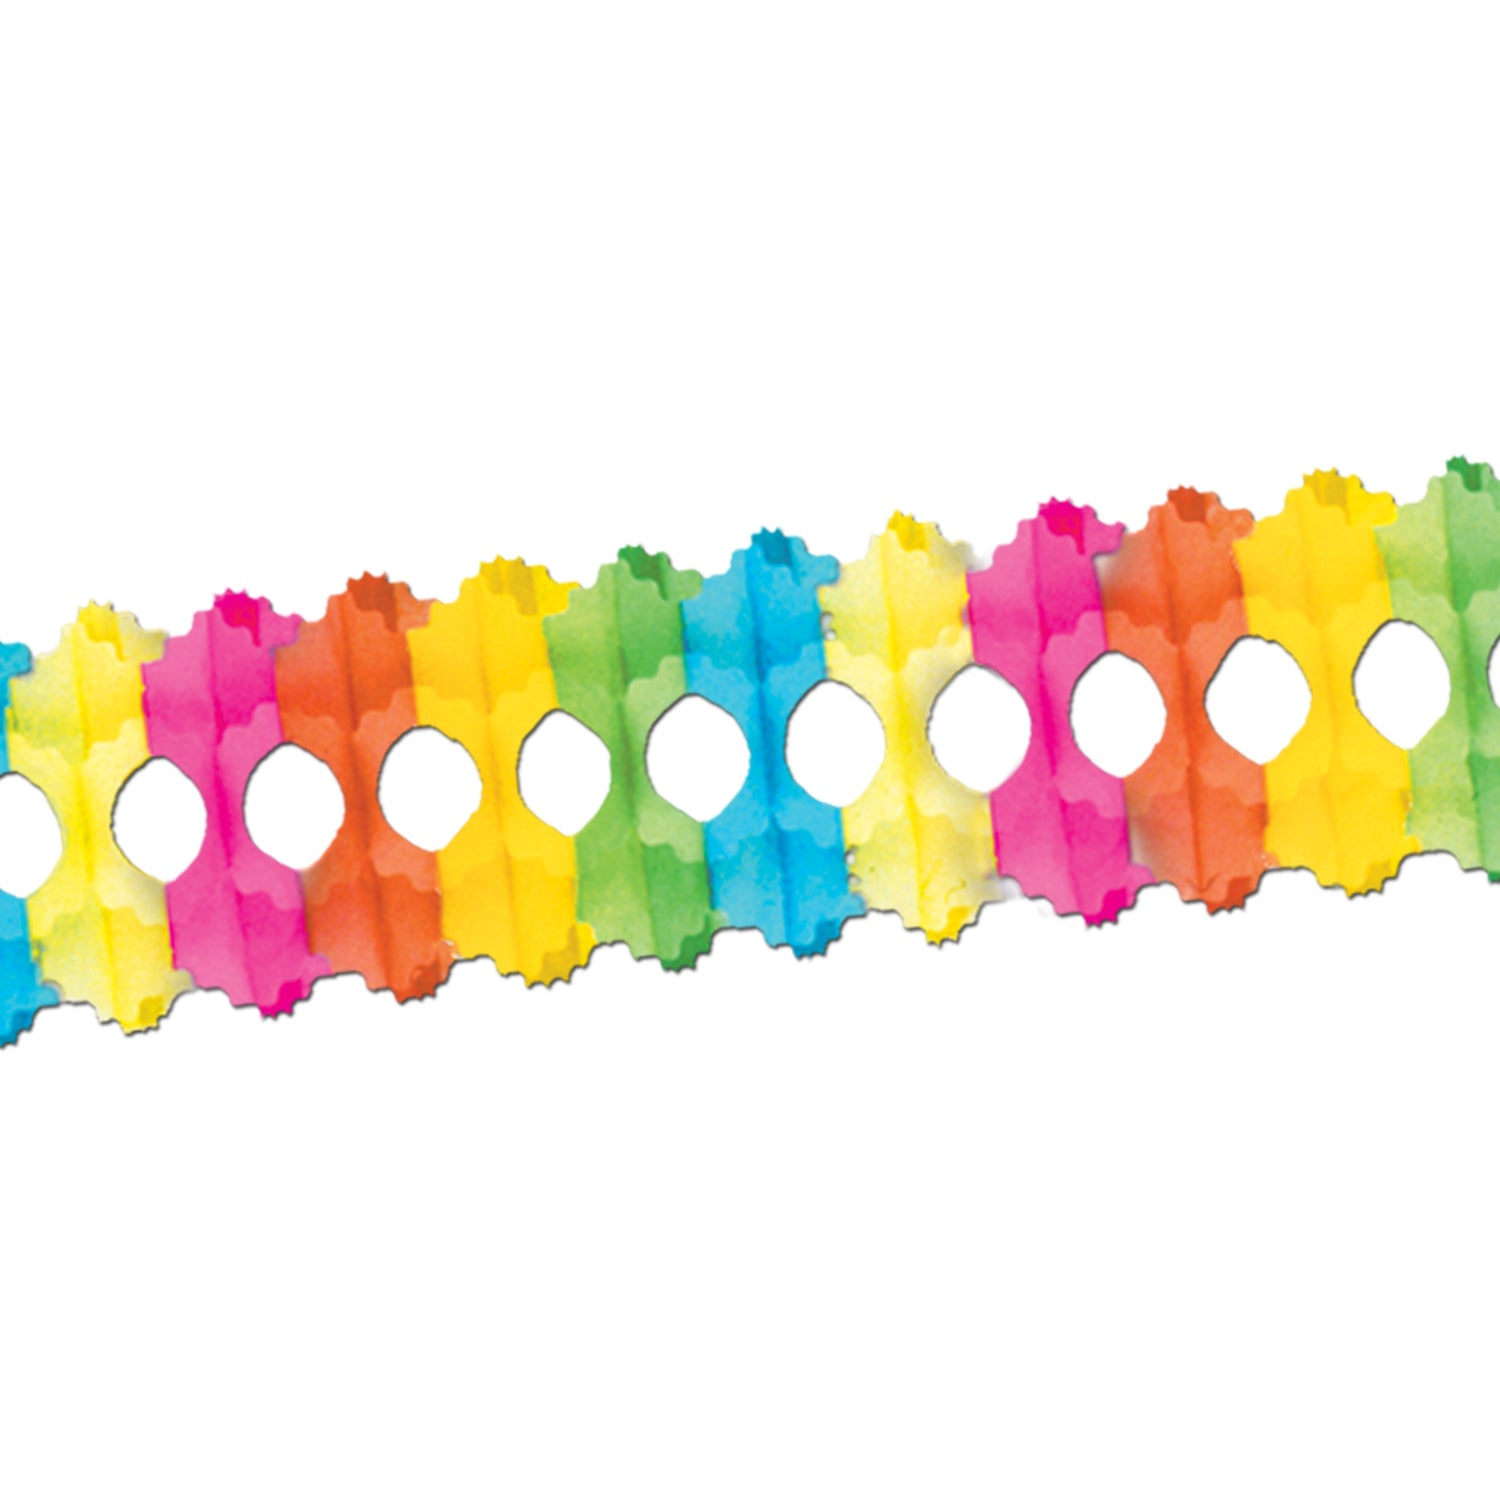 12' Multicolor Tissue Paper Arcade Garland | 1 Count